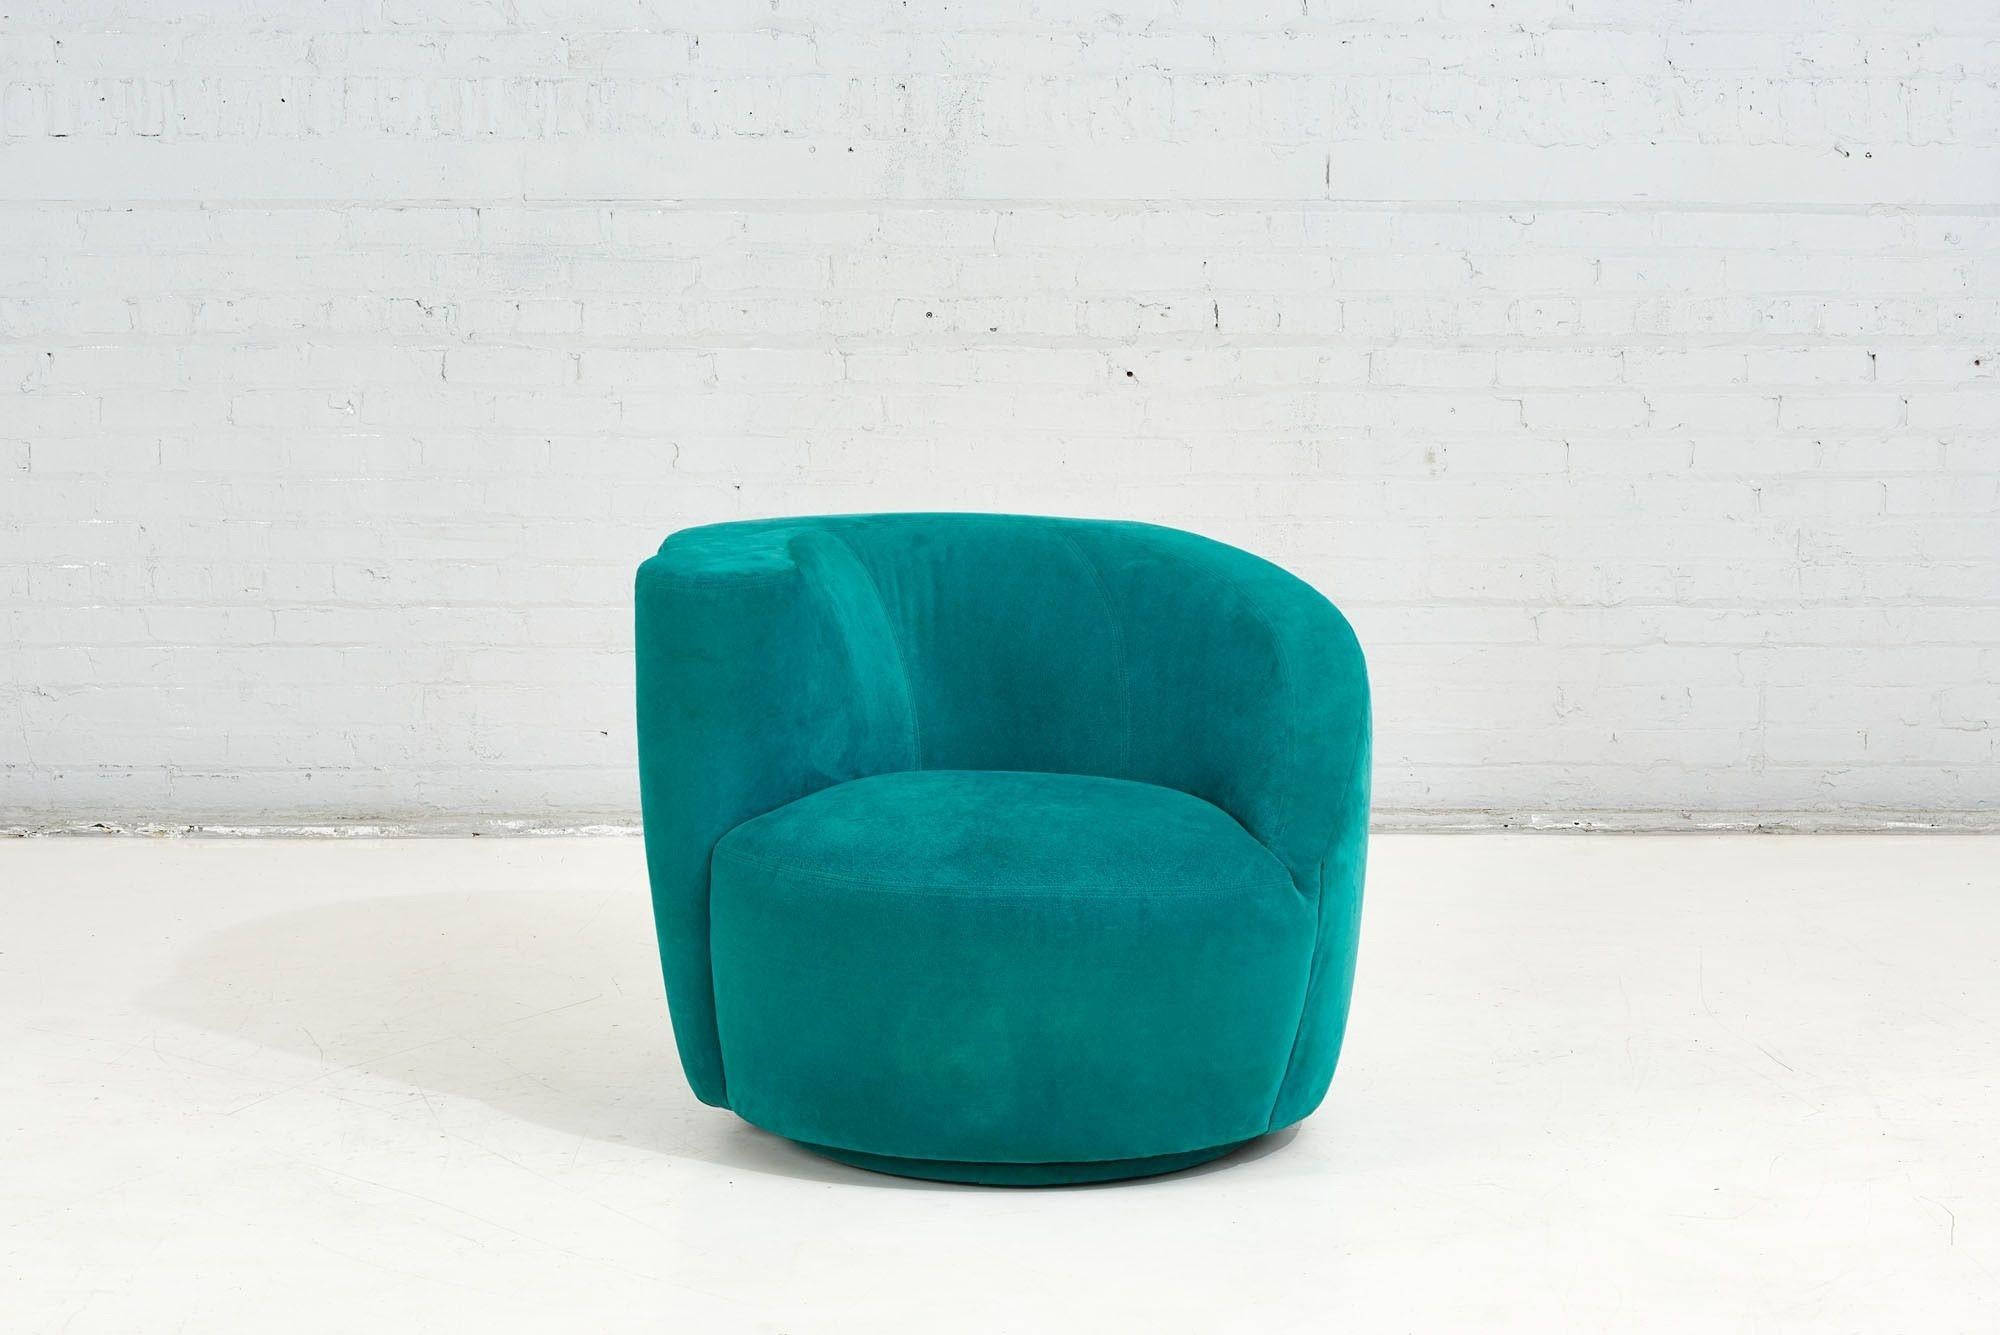 Vladimir Kagan Nautilus Corkscrew Swivel Lounge Chair, 1990.  Original Ultra suede fabric.  Purple Kagan corkscrew lounge chair sold in separate listing.